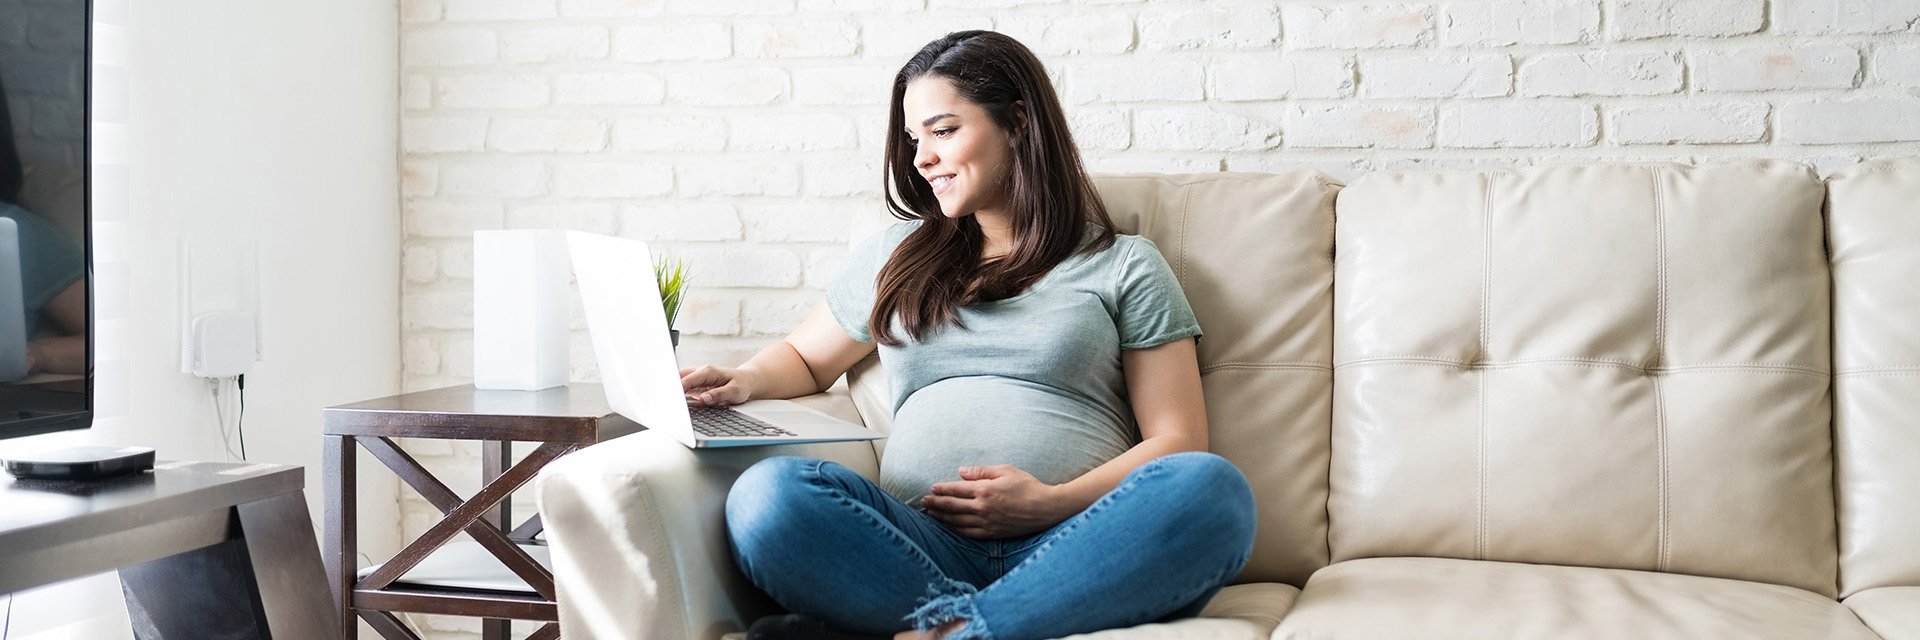 Pregnant Woman using laptop